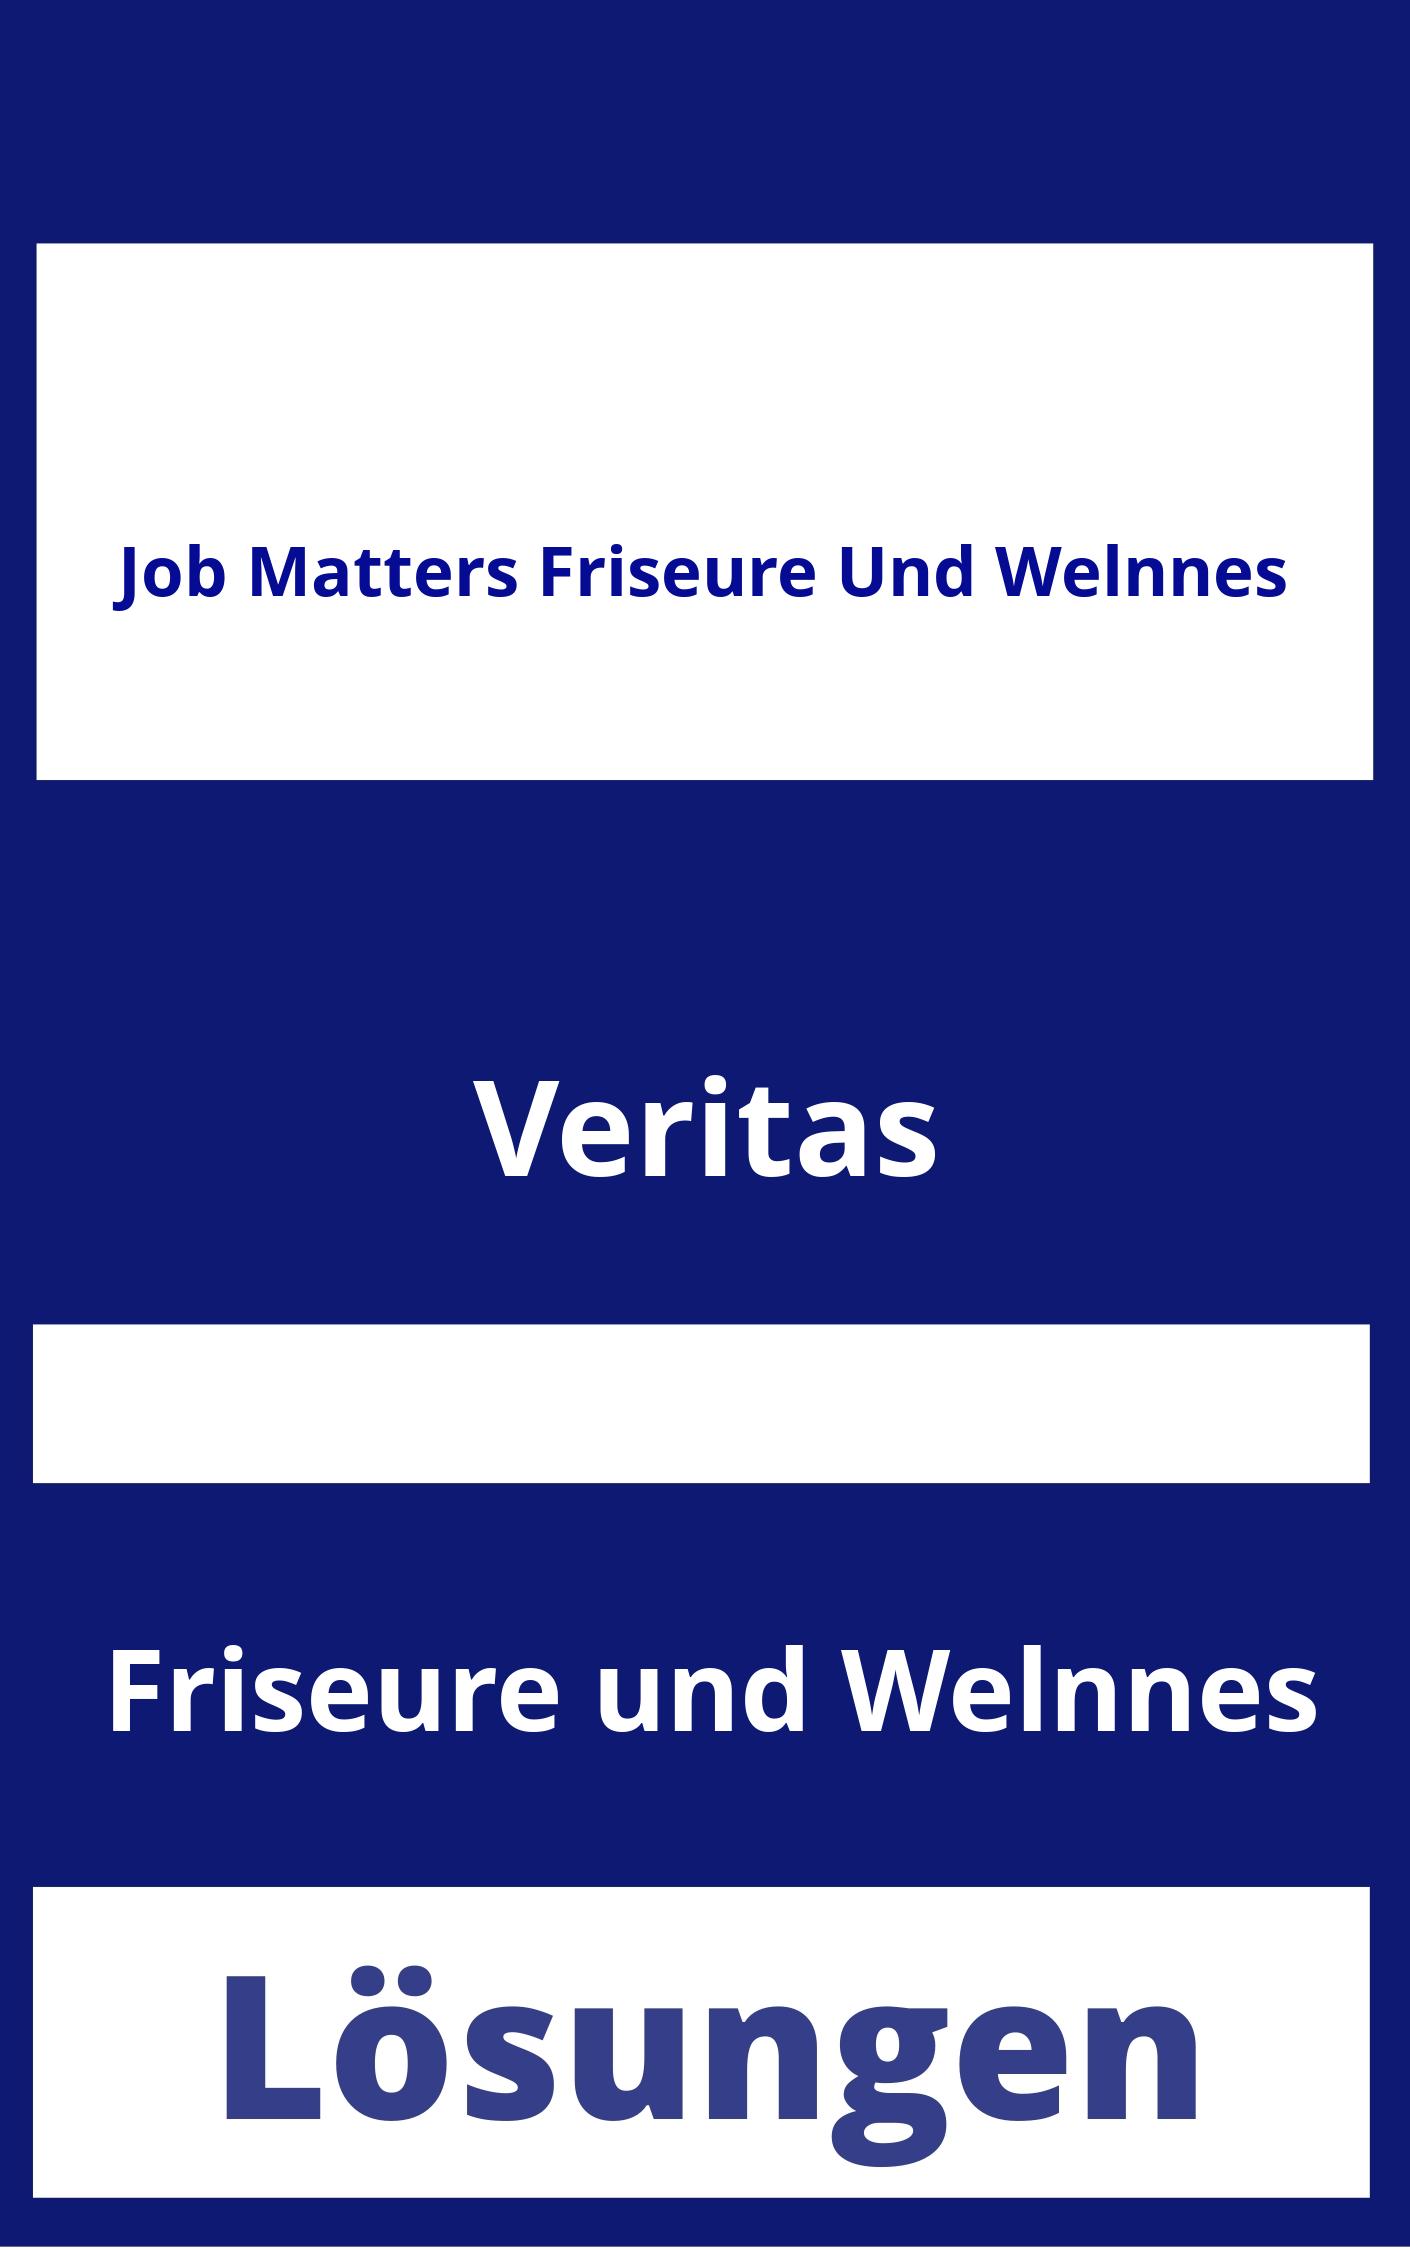 Job Matters Friseure und Welnnes Lösungen PDF